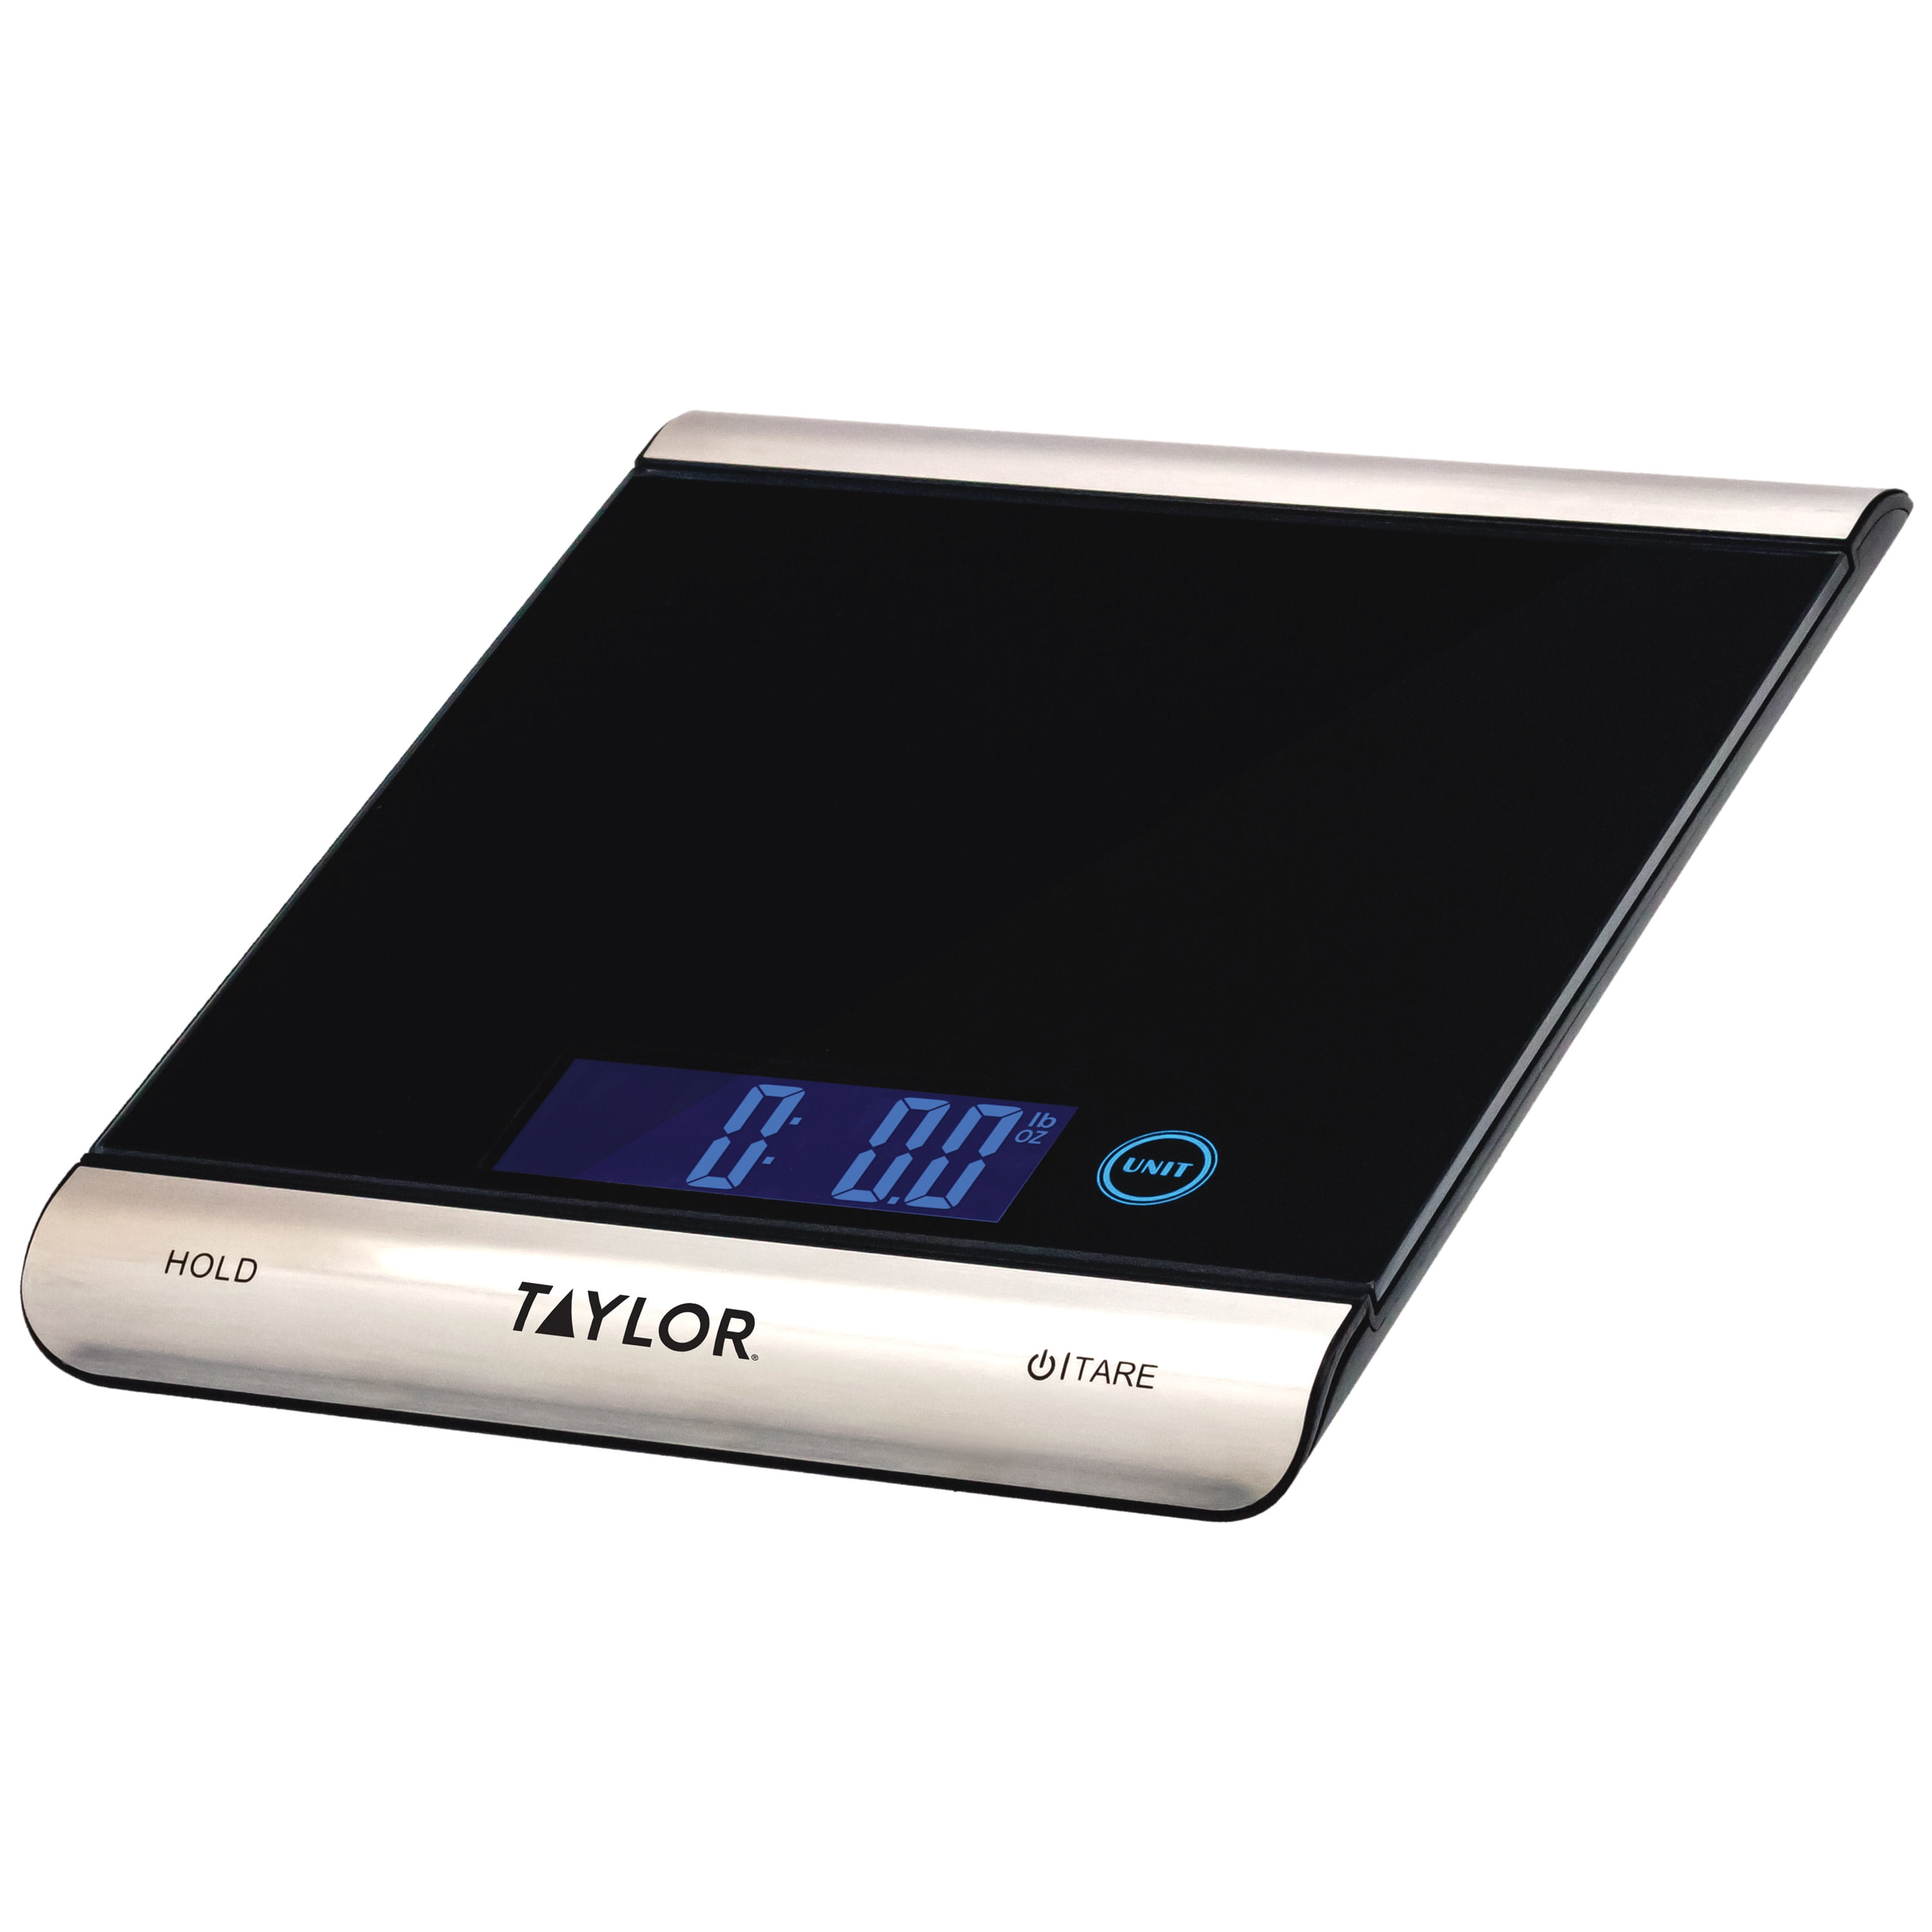 Taylor Digital LED Waterproof Kitchen Scale - 30 lbs Capacity